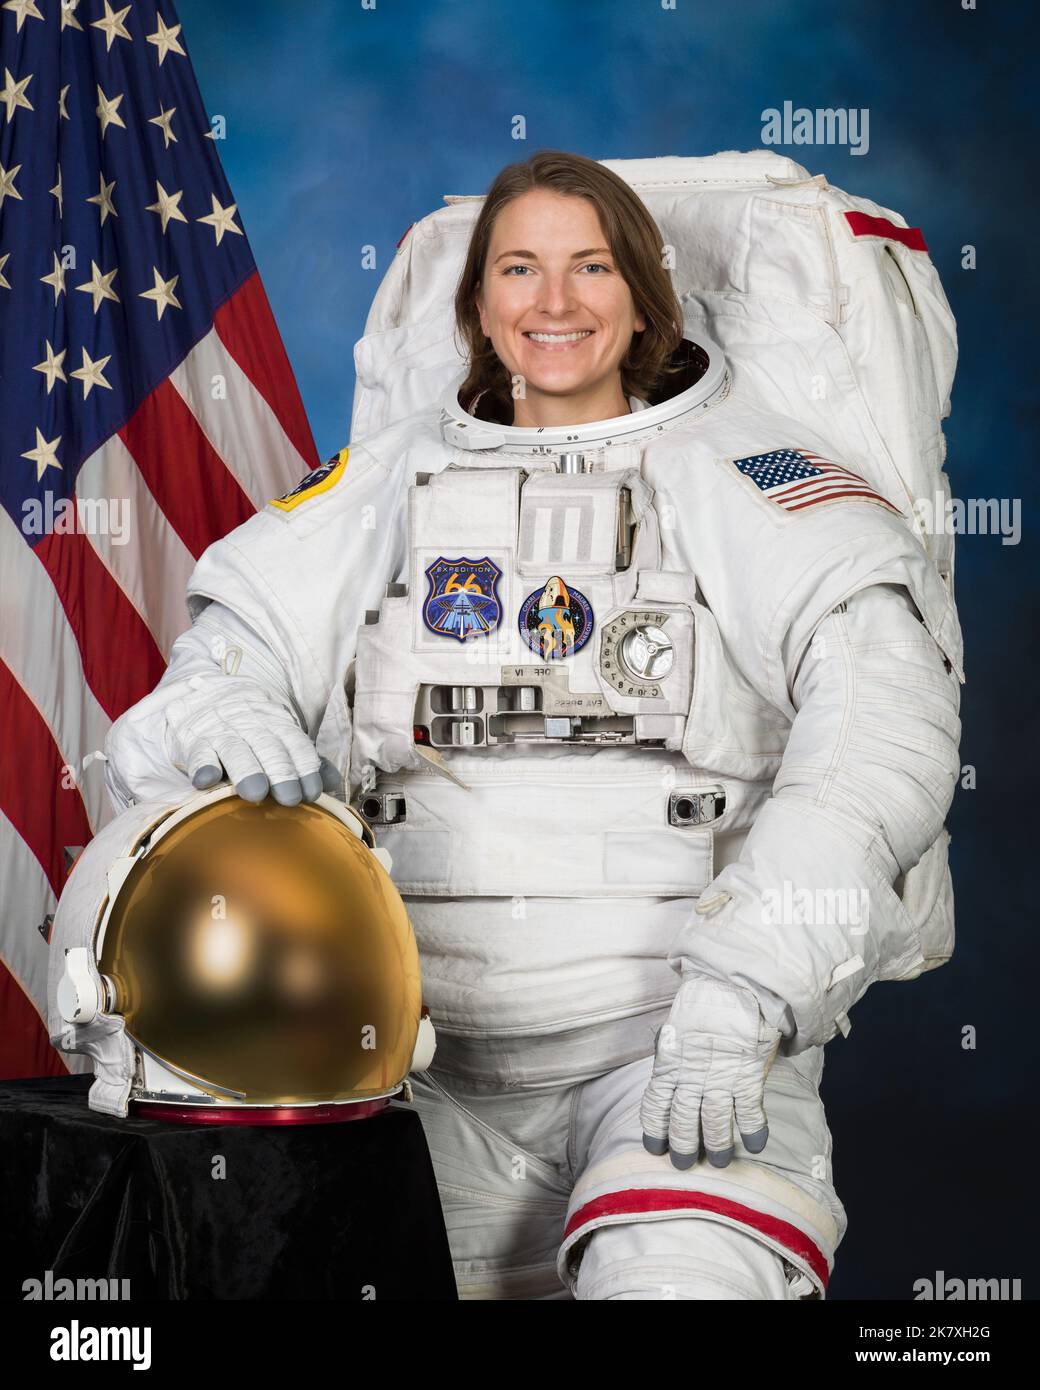 Official NASA Portrait of astronaut Kayla Barron Stock Photo